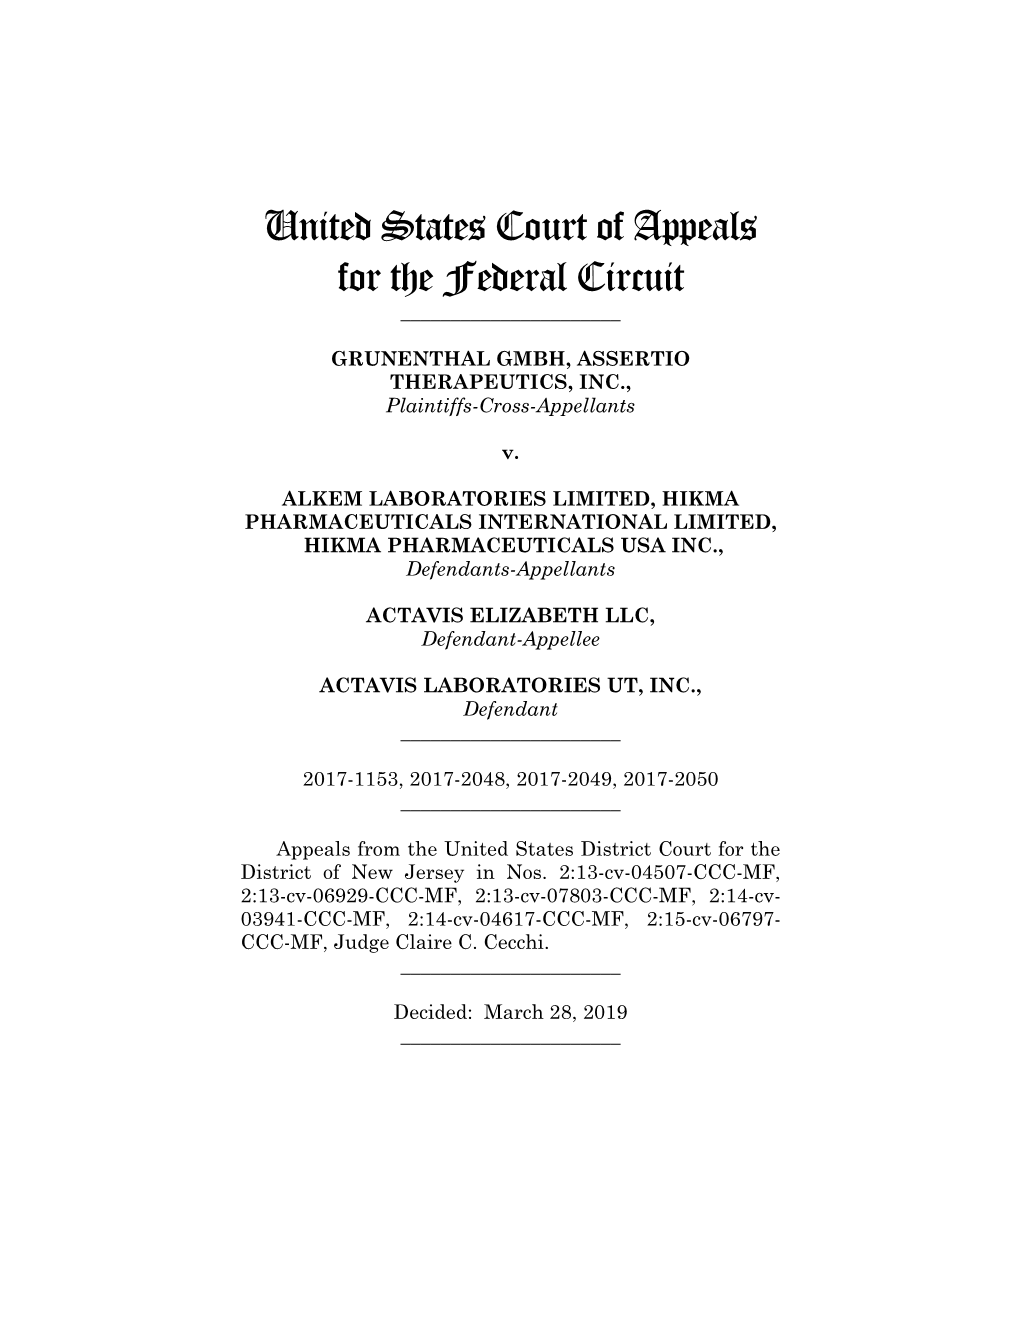 GRUNENTHAL GMBH, ASSERTIO THERAPEUTICS, INC., Plaintiffs-Cross-Appellants